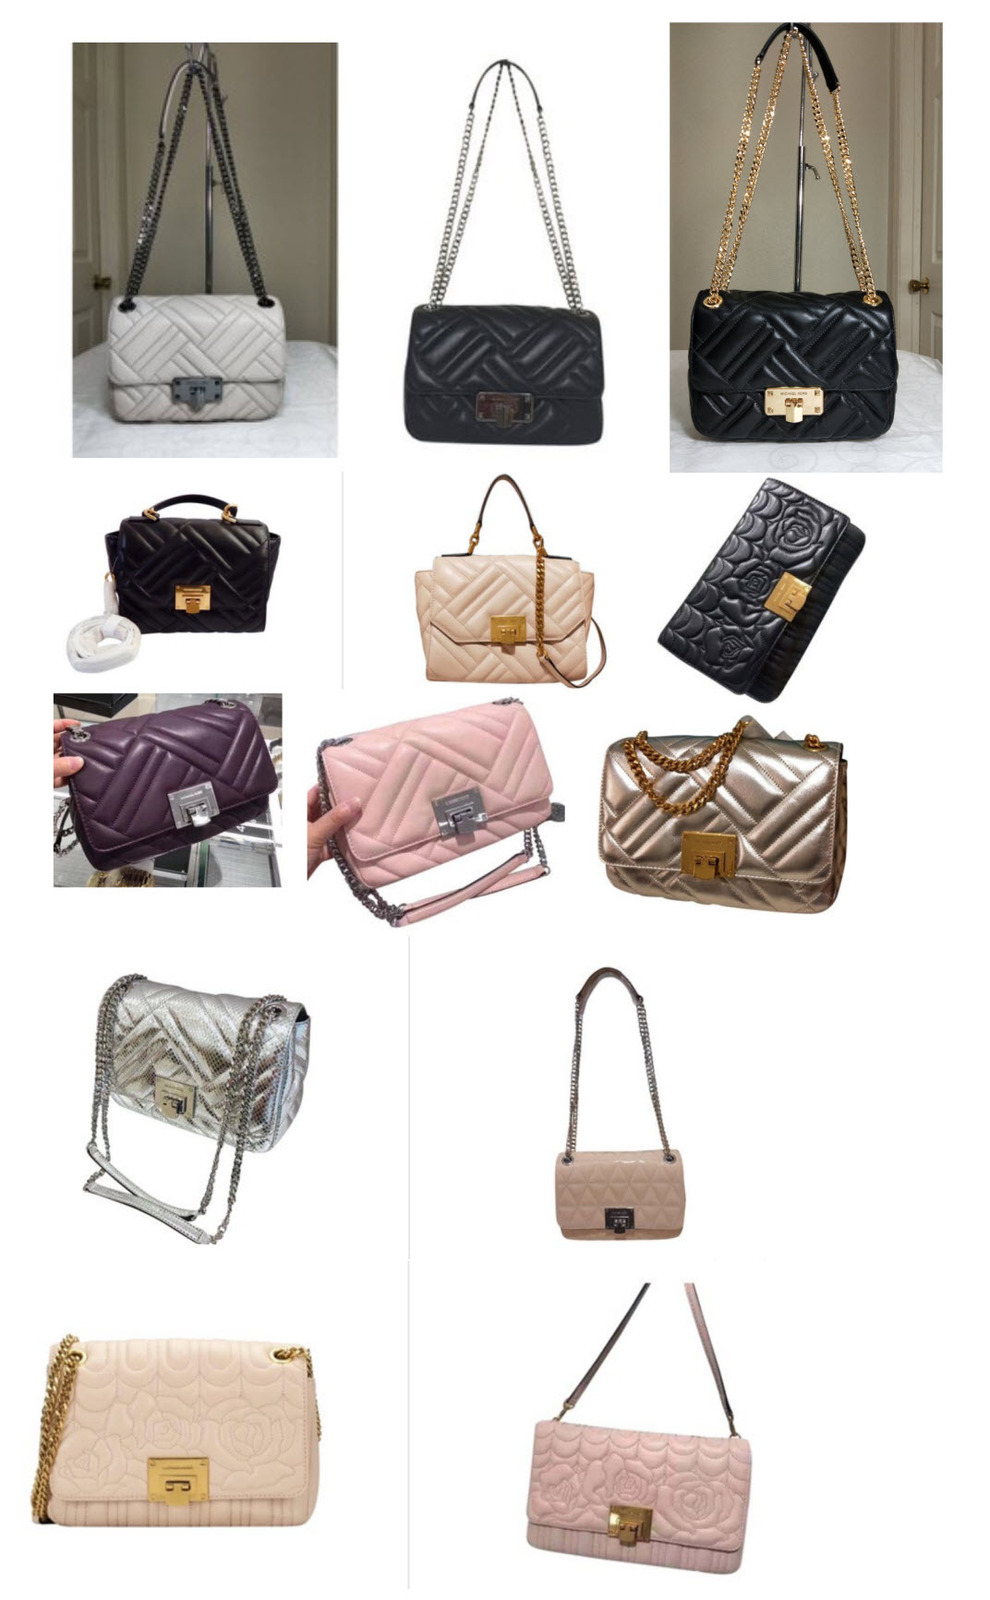 ❤️NWT Michael Kors Peyton Shoulder Bag Flap Quilted Leather Vivianne top Handle  - $103.99 - $119.00